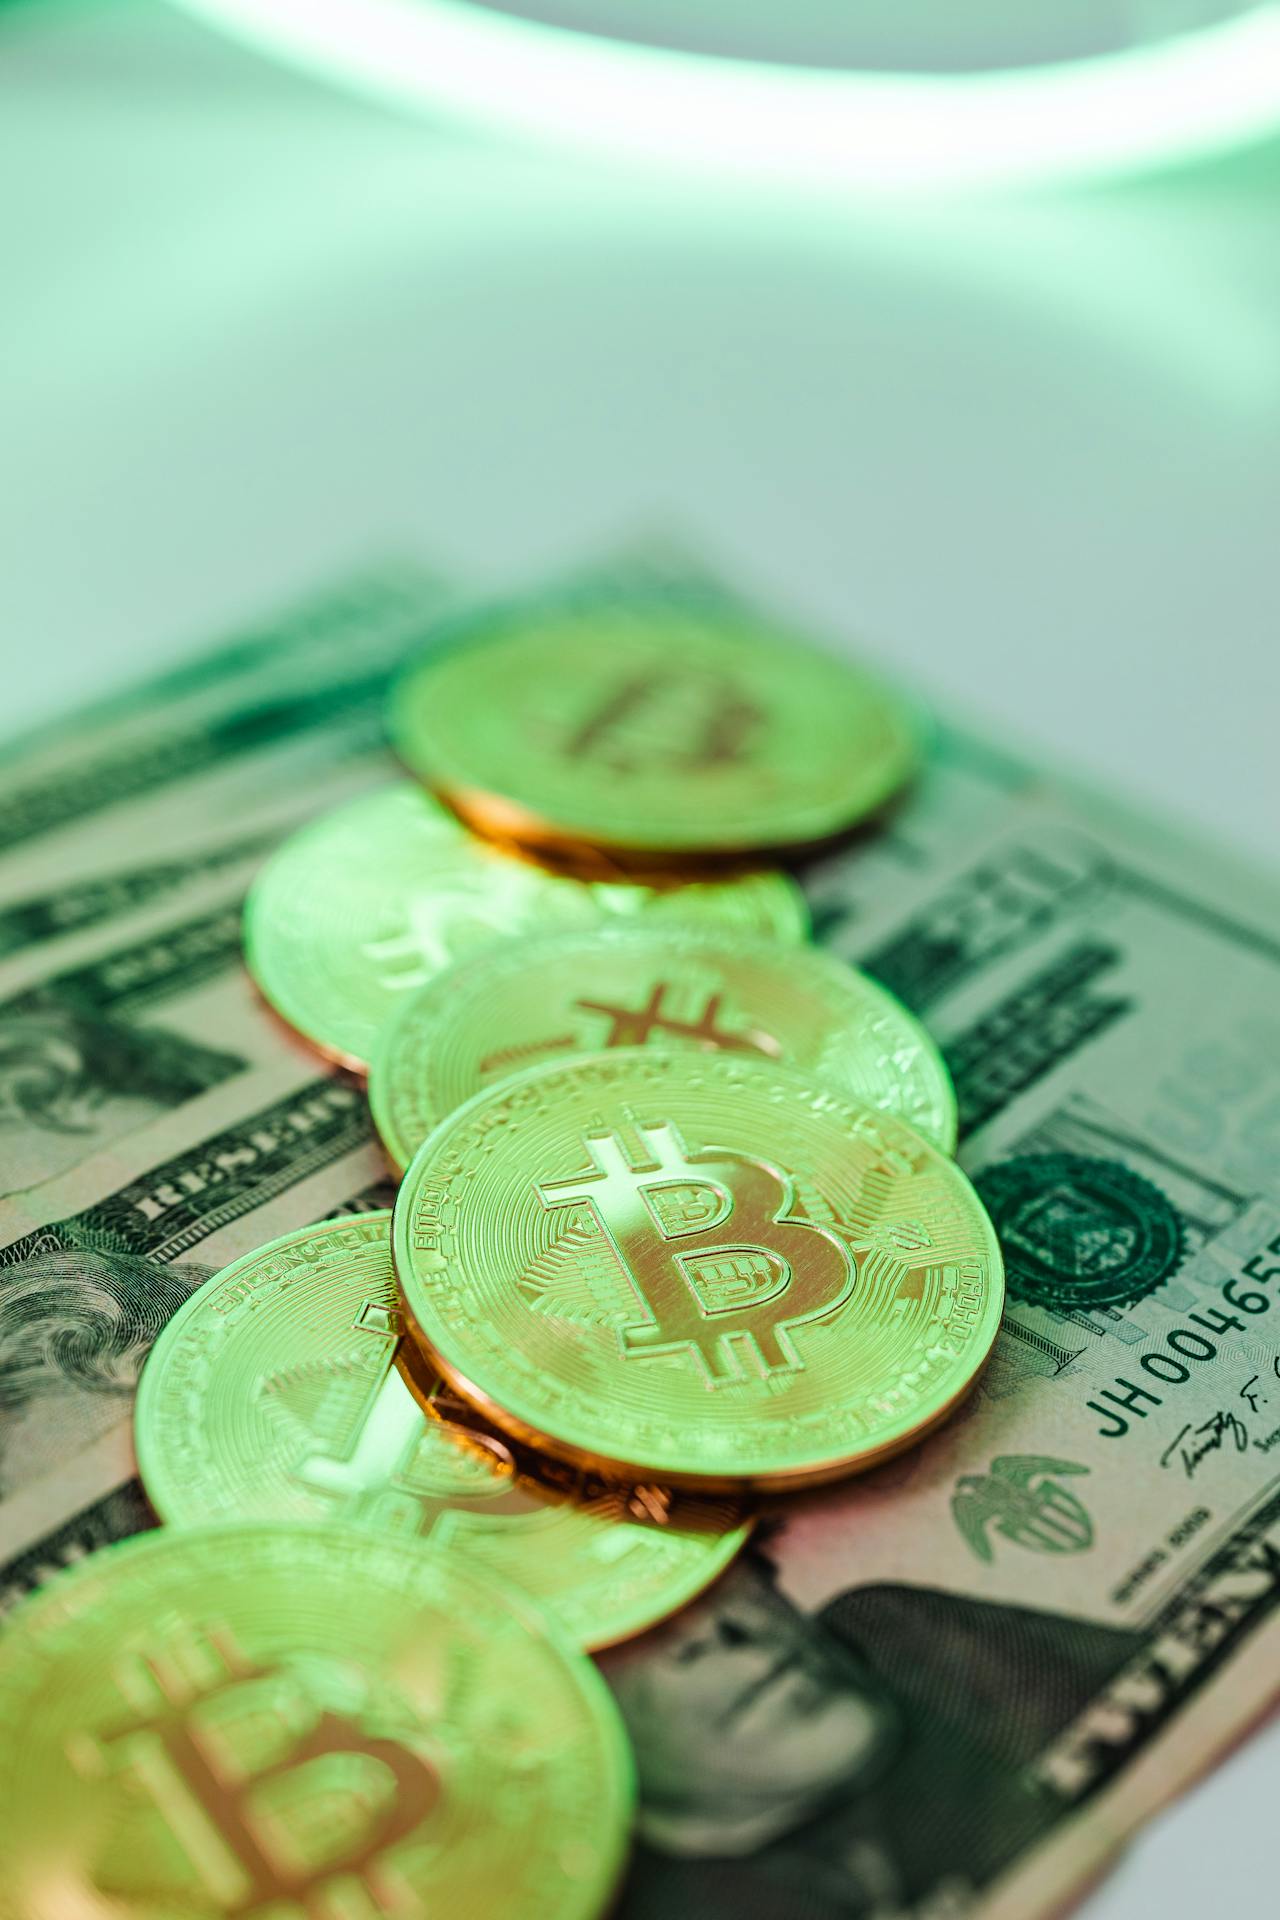 Bitcoin with a green hue